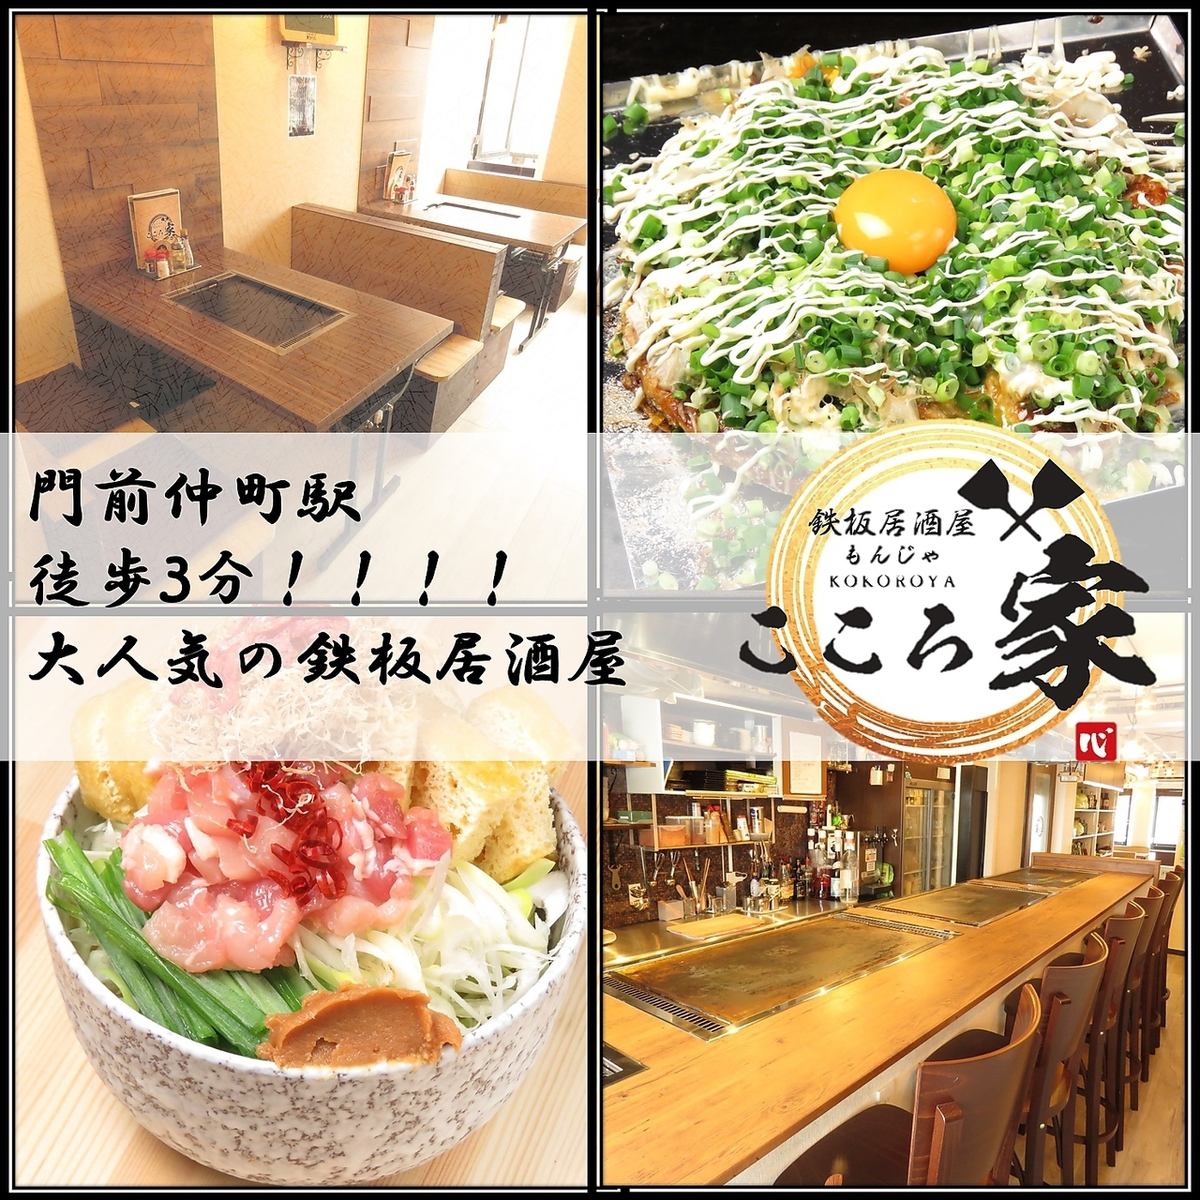 Teppanyaki izakaya such as monja and okonomiyaki!